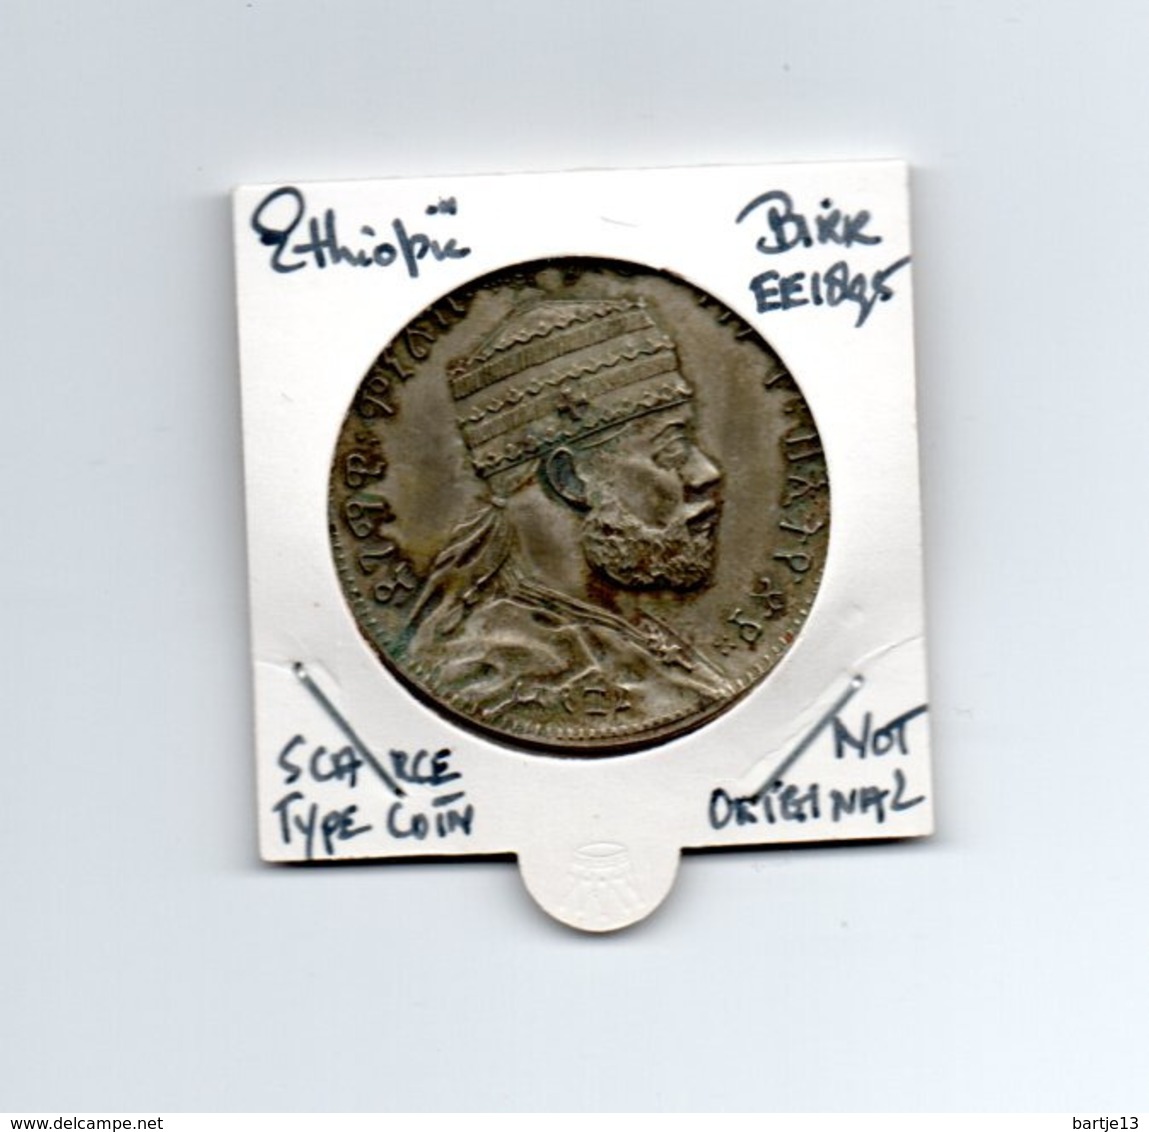 ETHIOPIE BIRR EE1895 TYPE COIN SCARCE - NOT ORIGINAL - - Ethiopie